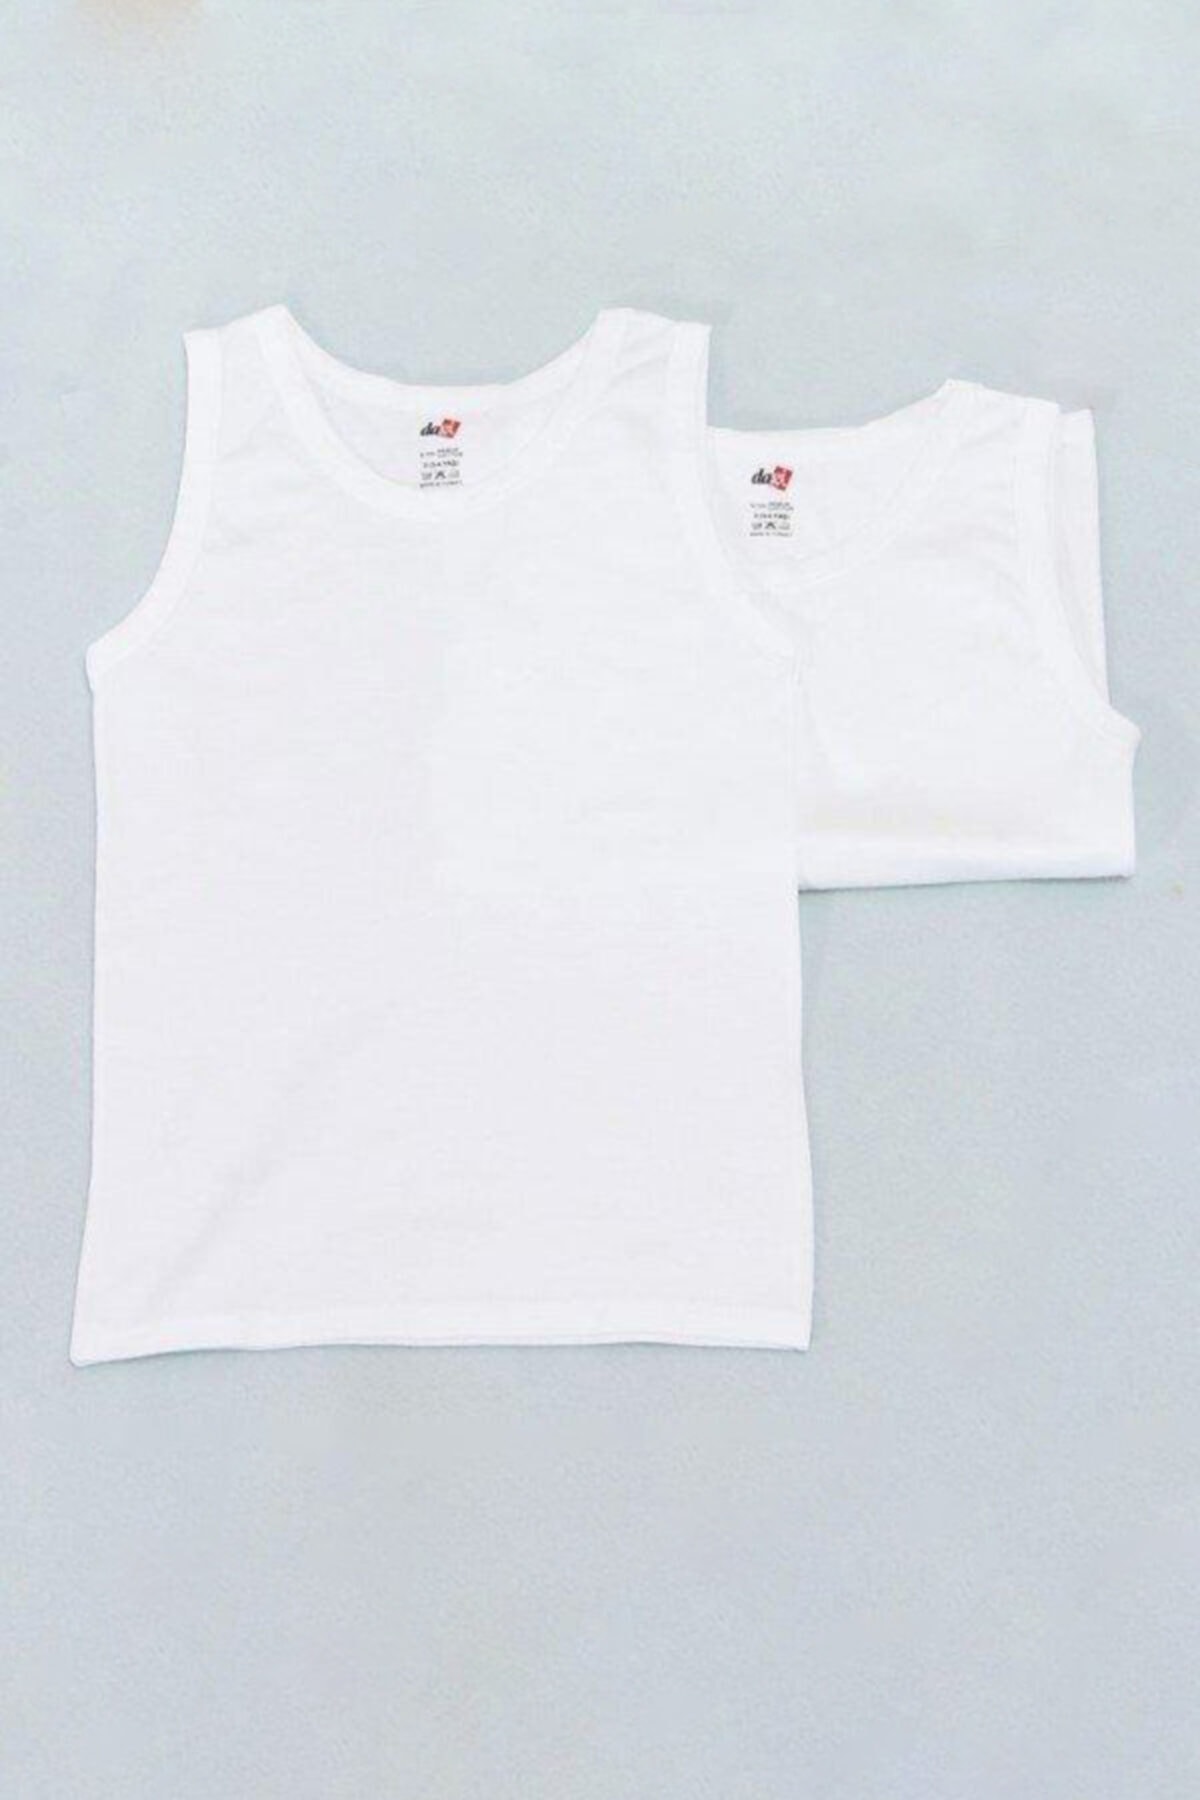 Dagi White Boy's Cotton 2-Piece Undershirt